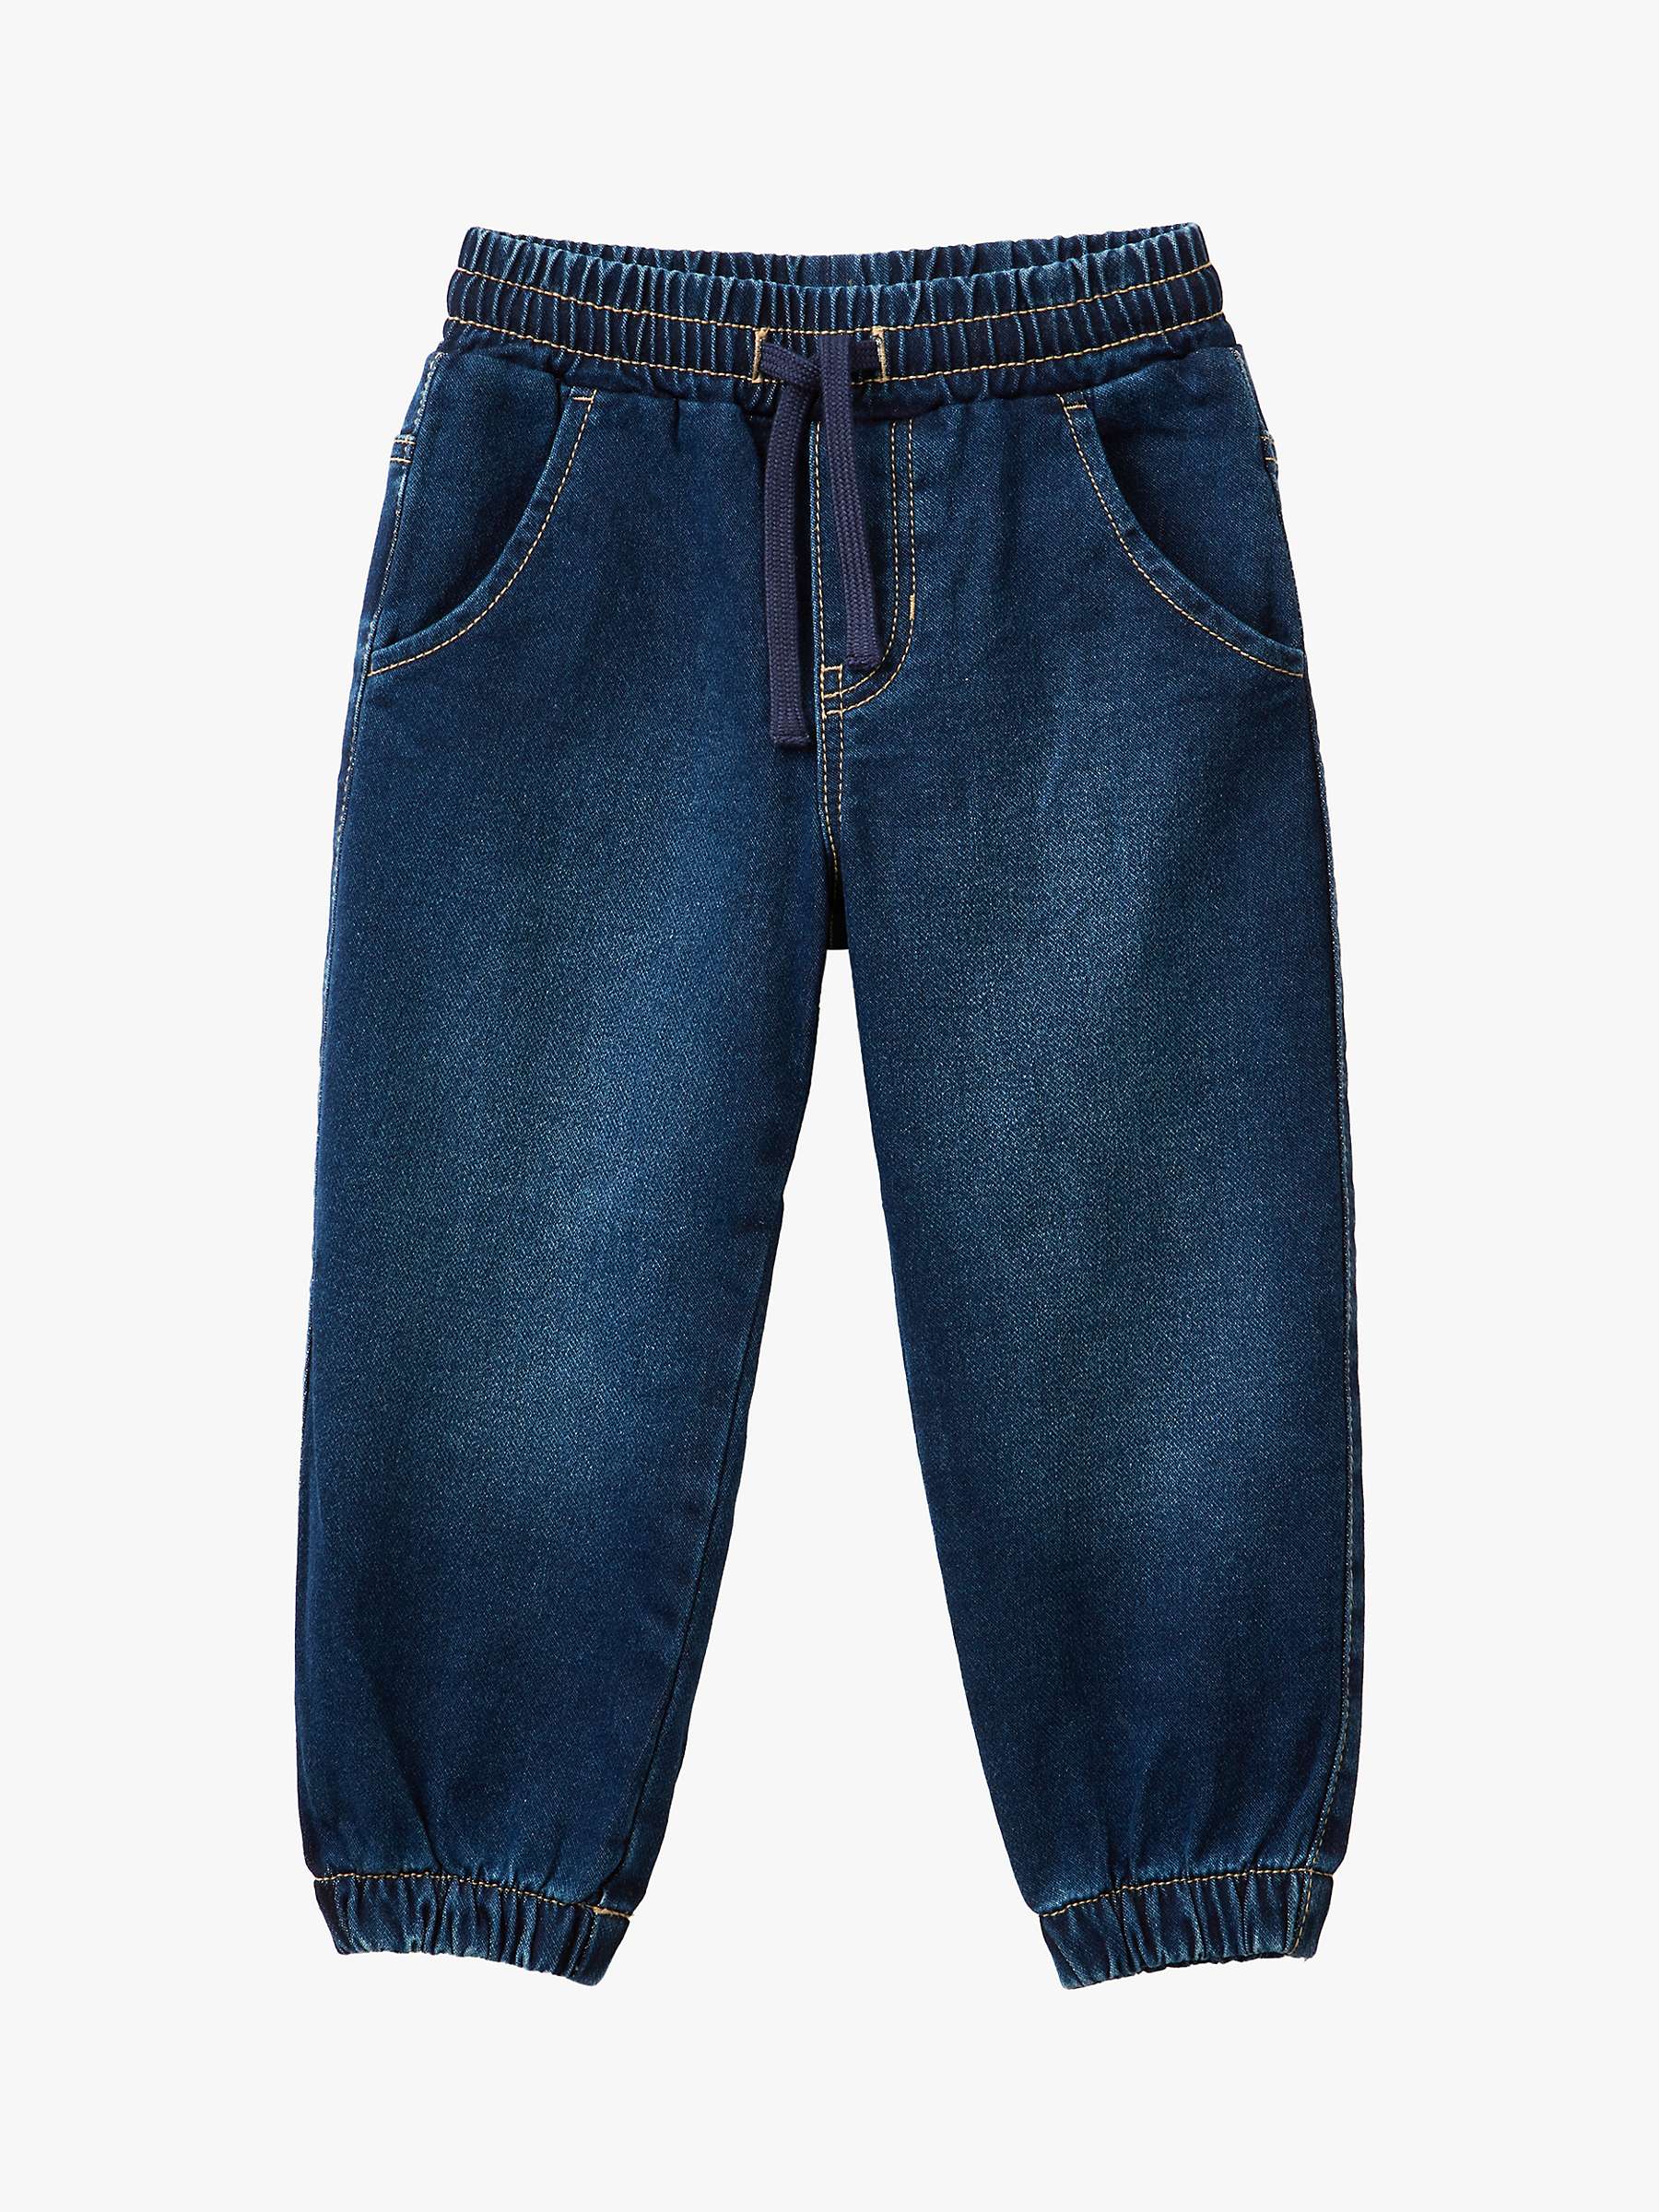 Buy Benetton Kids' Comfort Fit Drawstring Denim Trousers, Blue Online at johnlewis.com